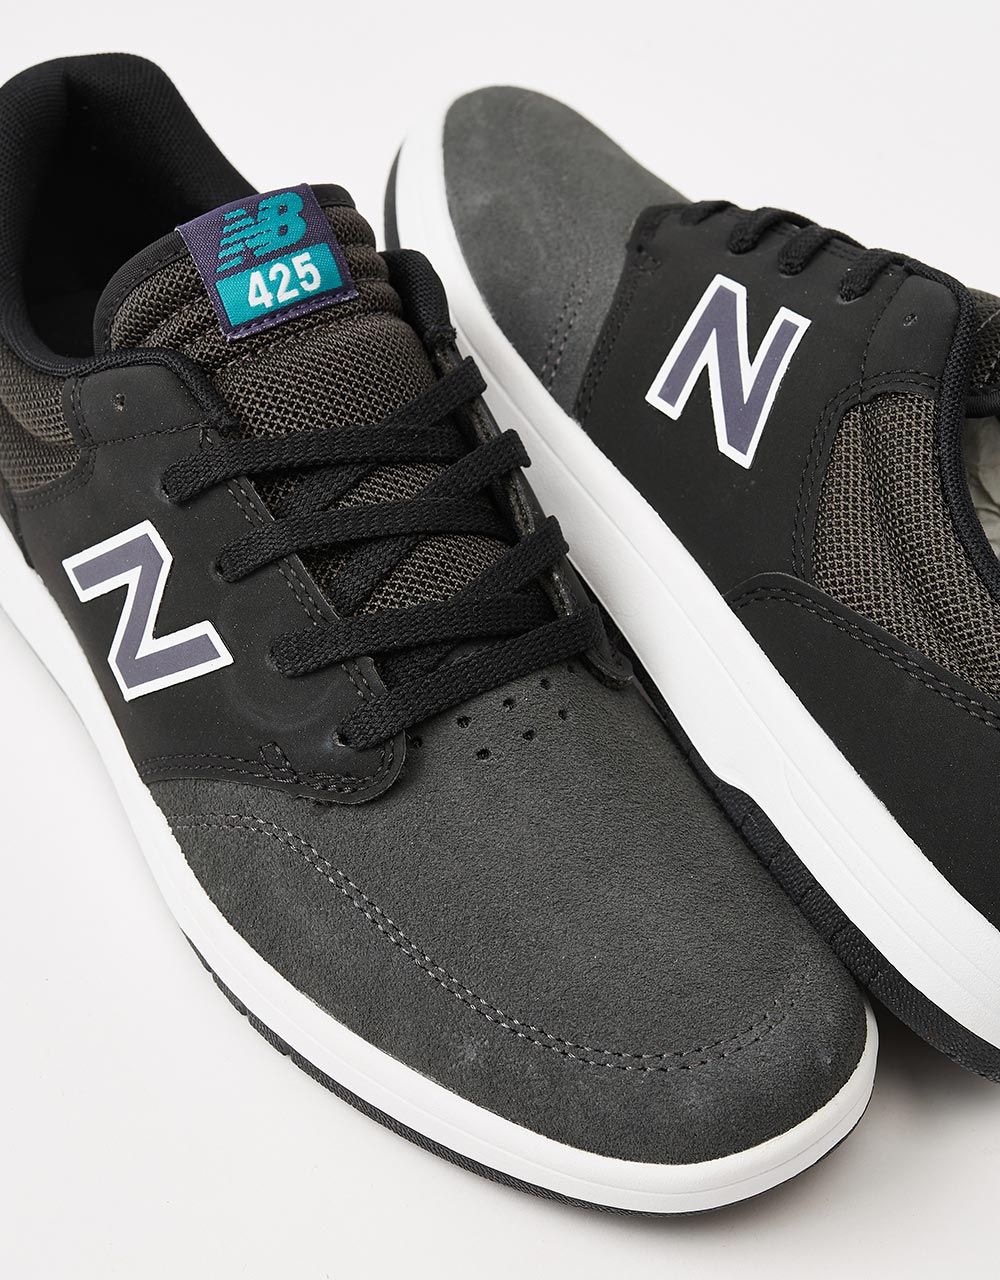 New Balance Numeric 425 Skate Shoes - Grey/Black